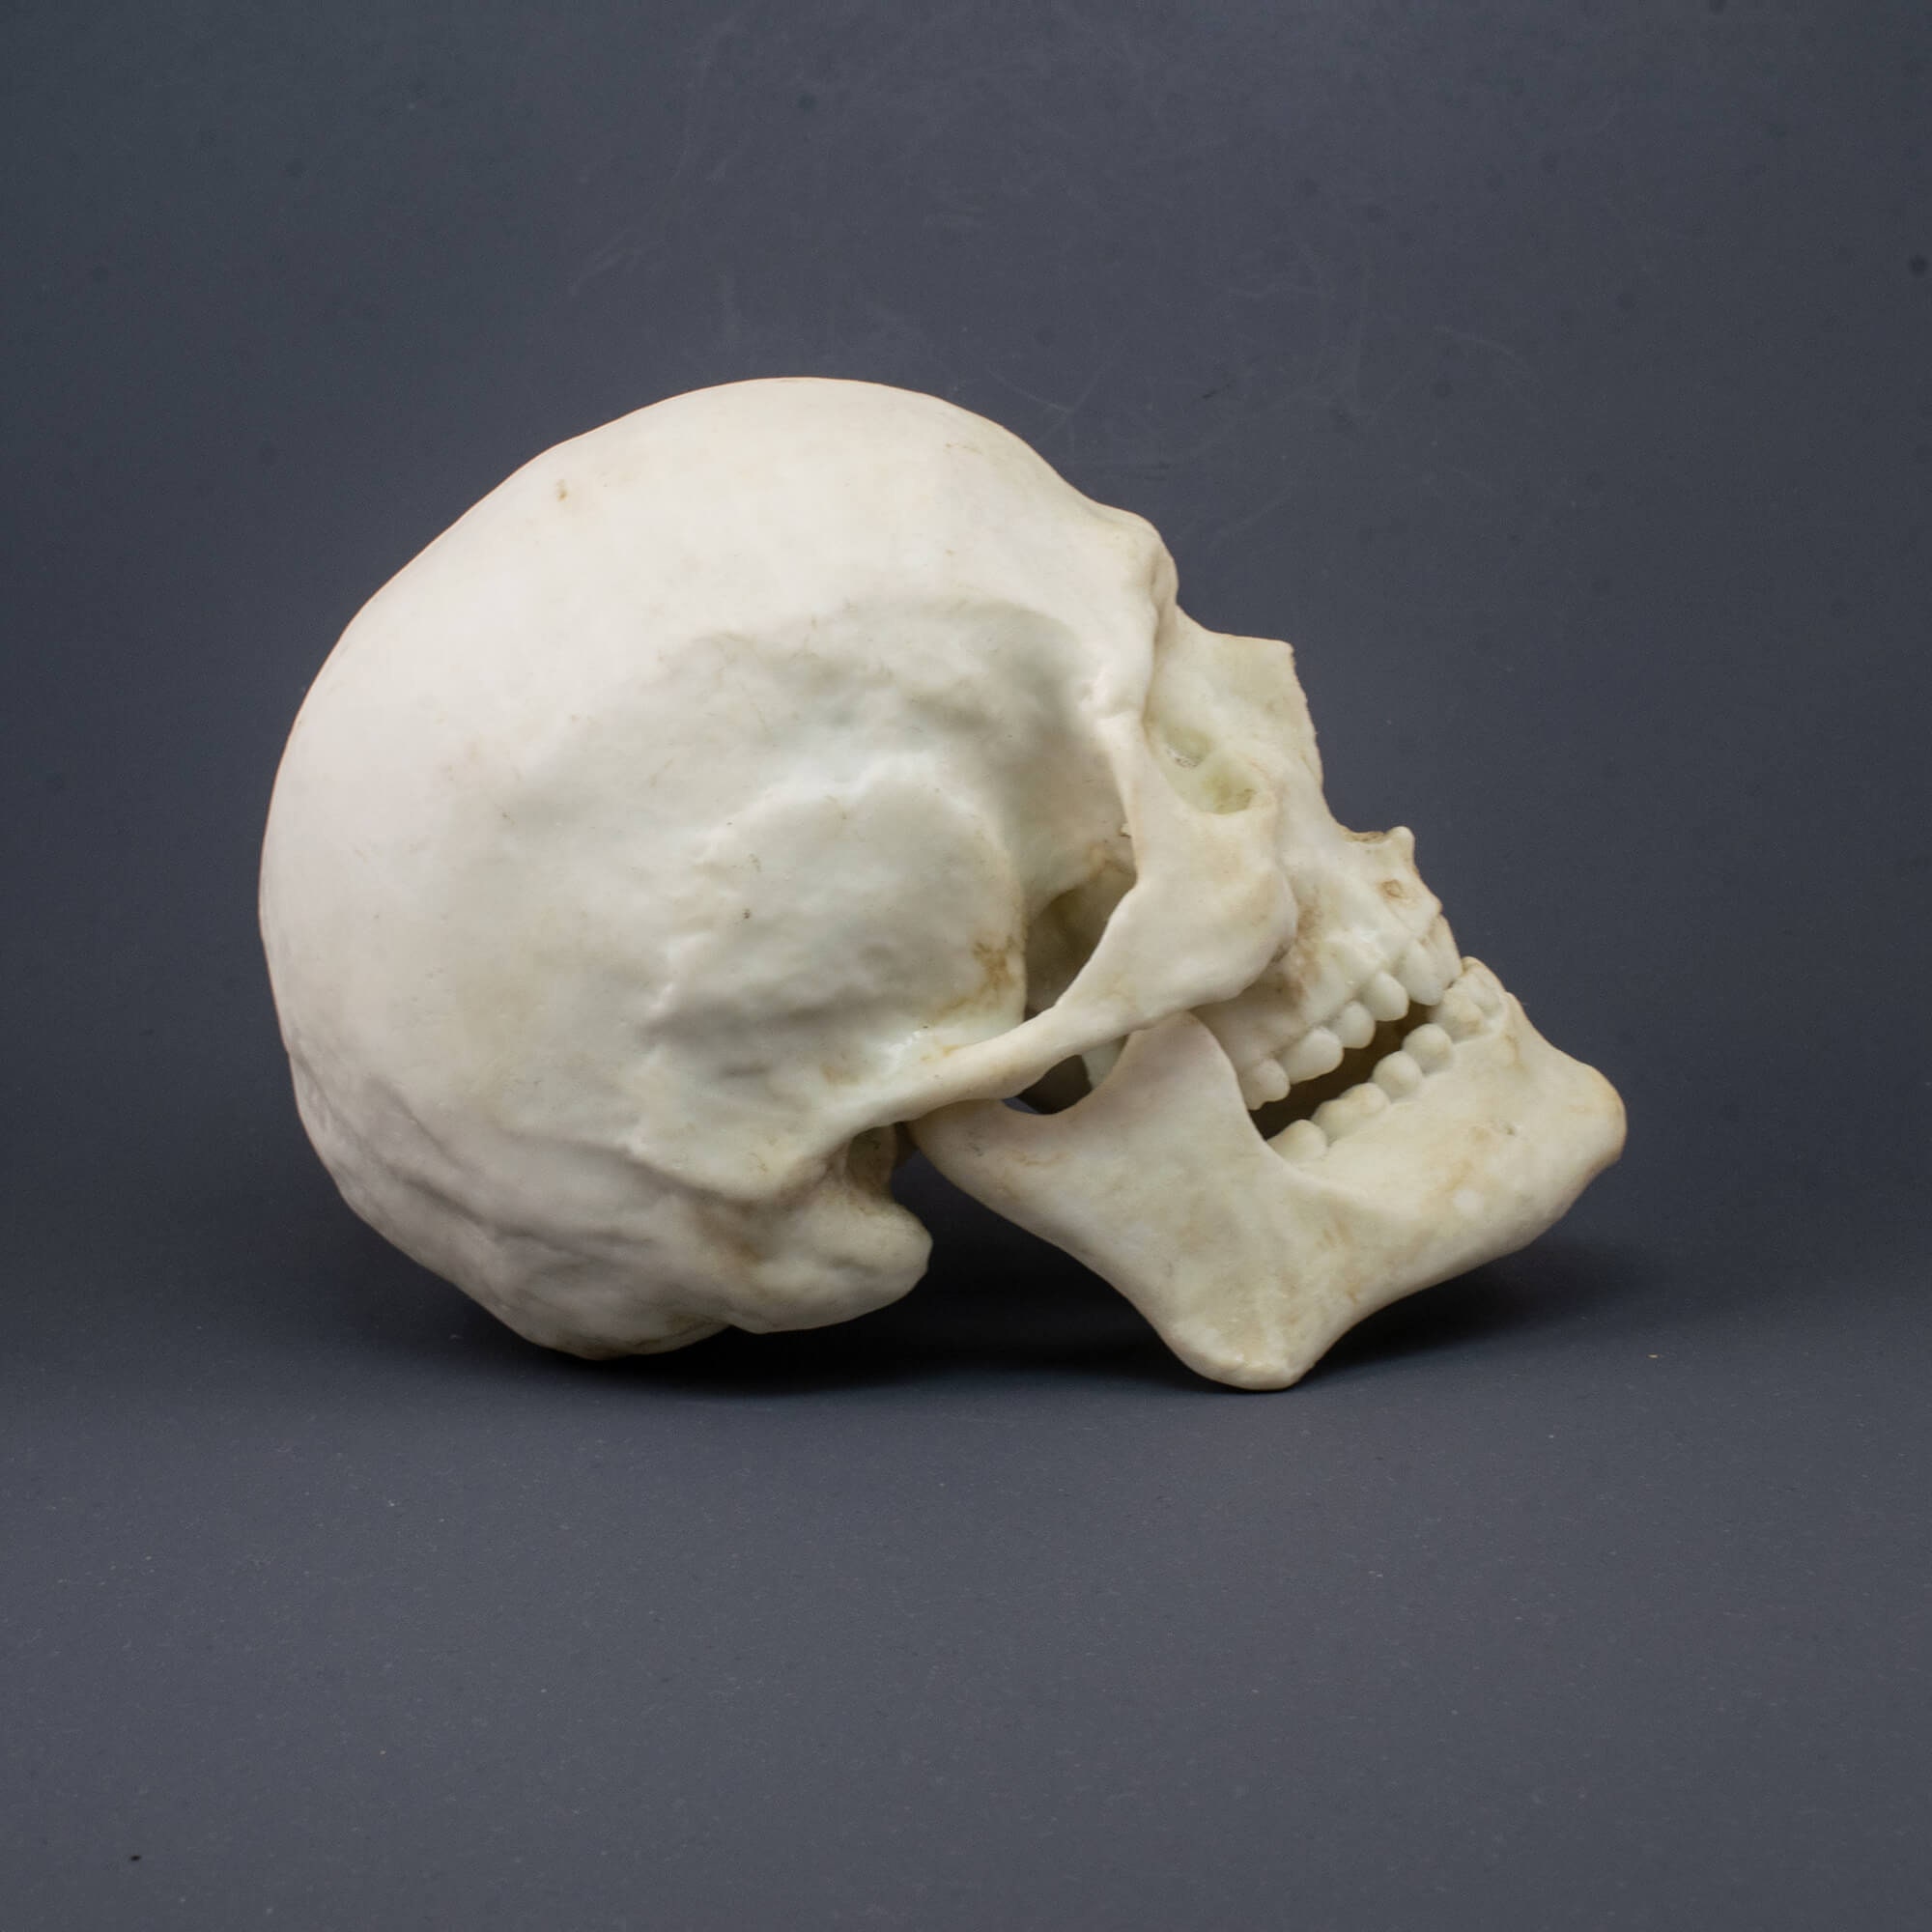 HUMAN MALE SKULL, Skull Duggery, USD 173.03